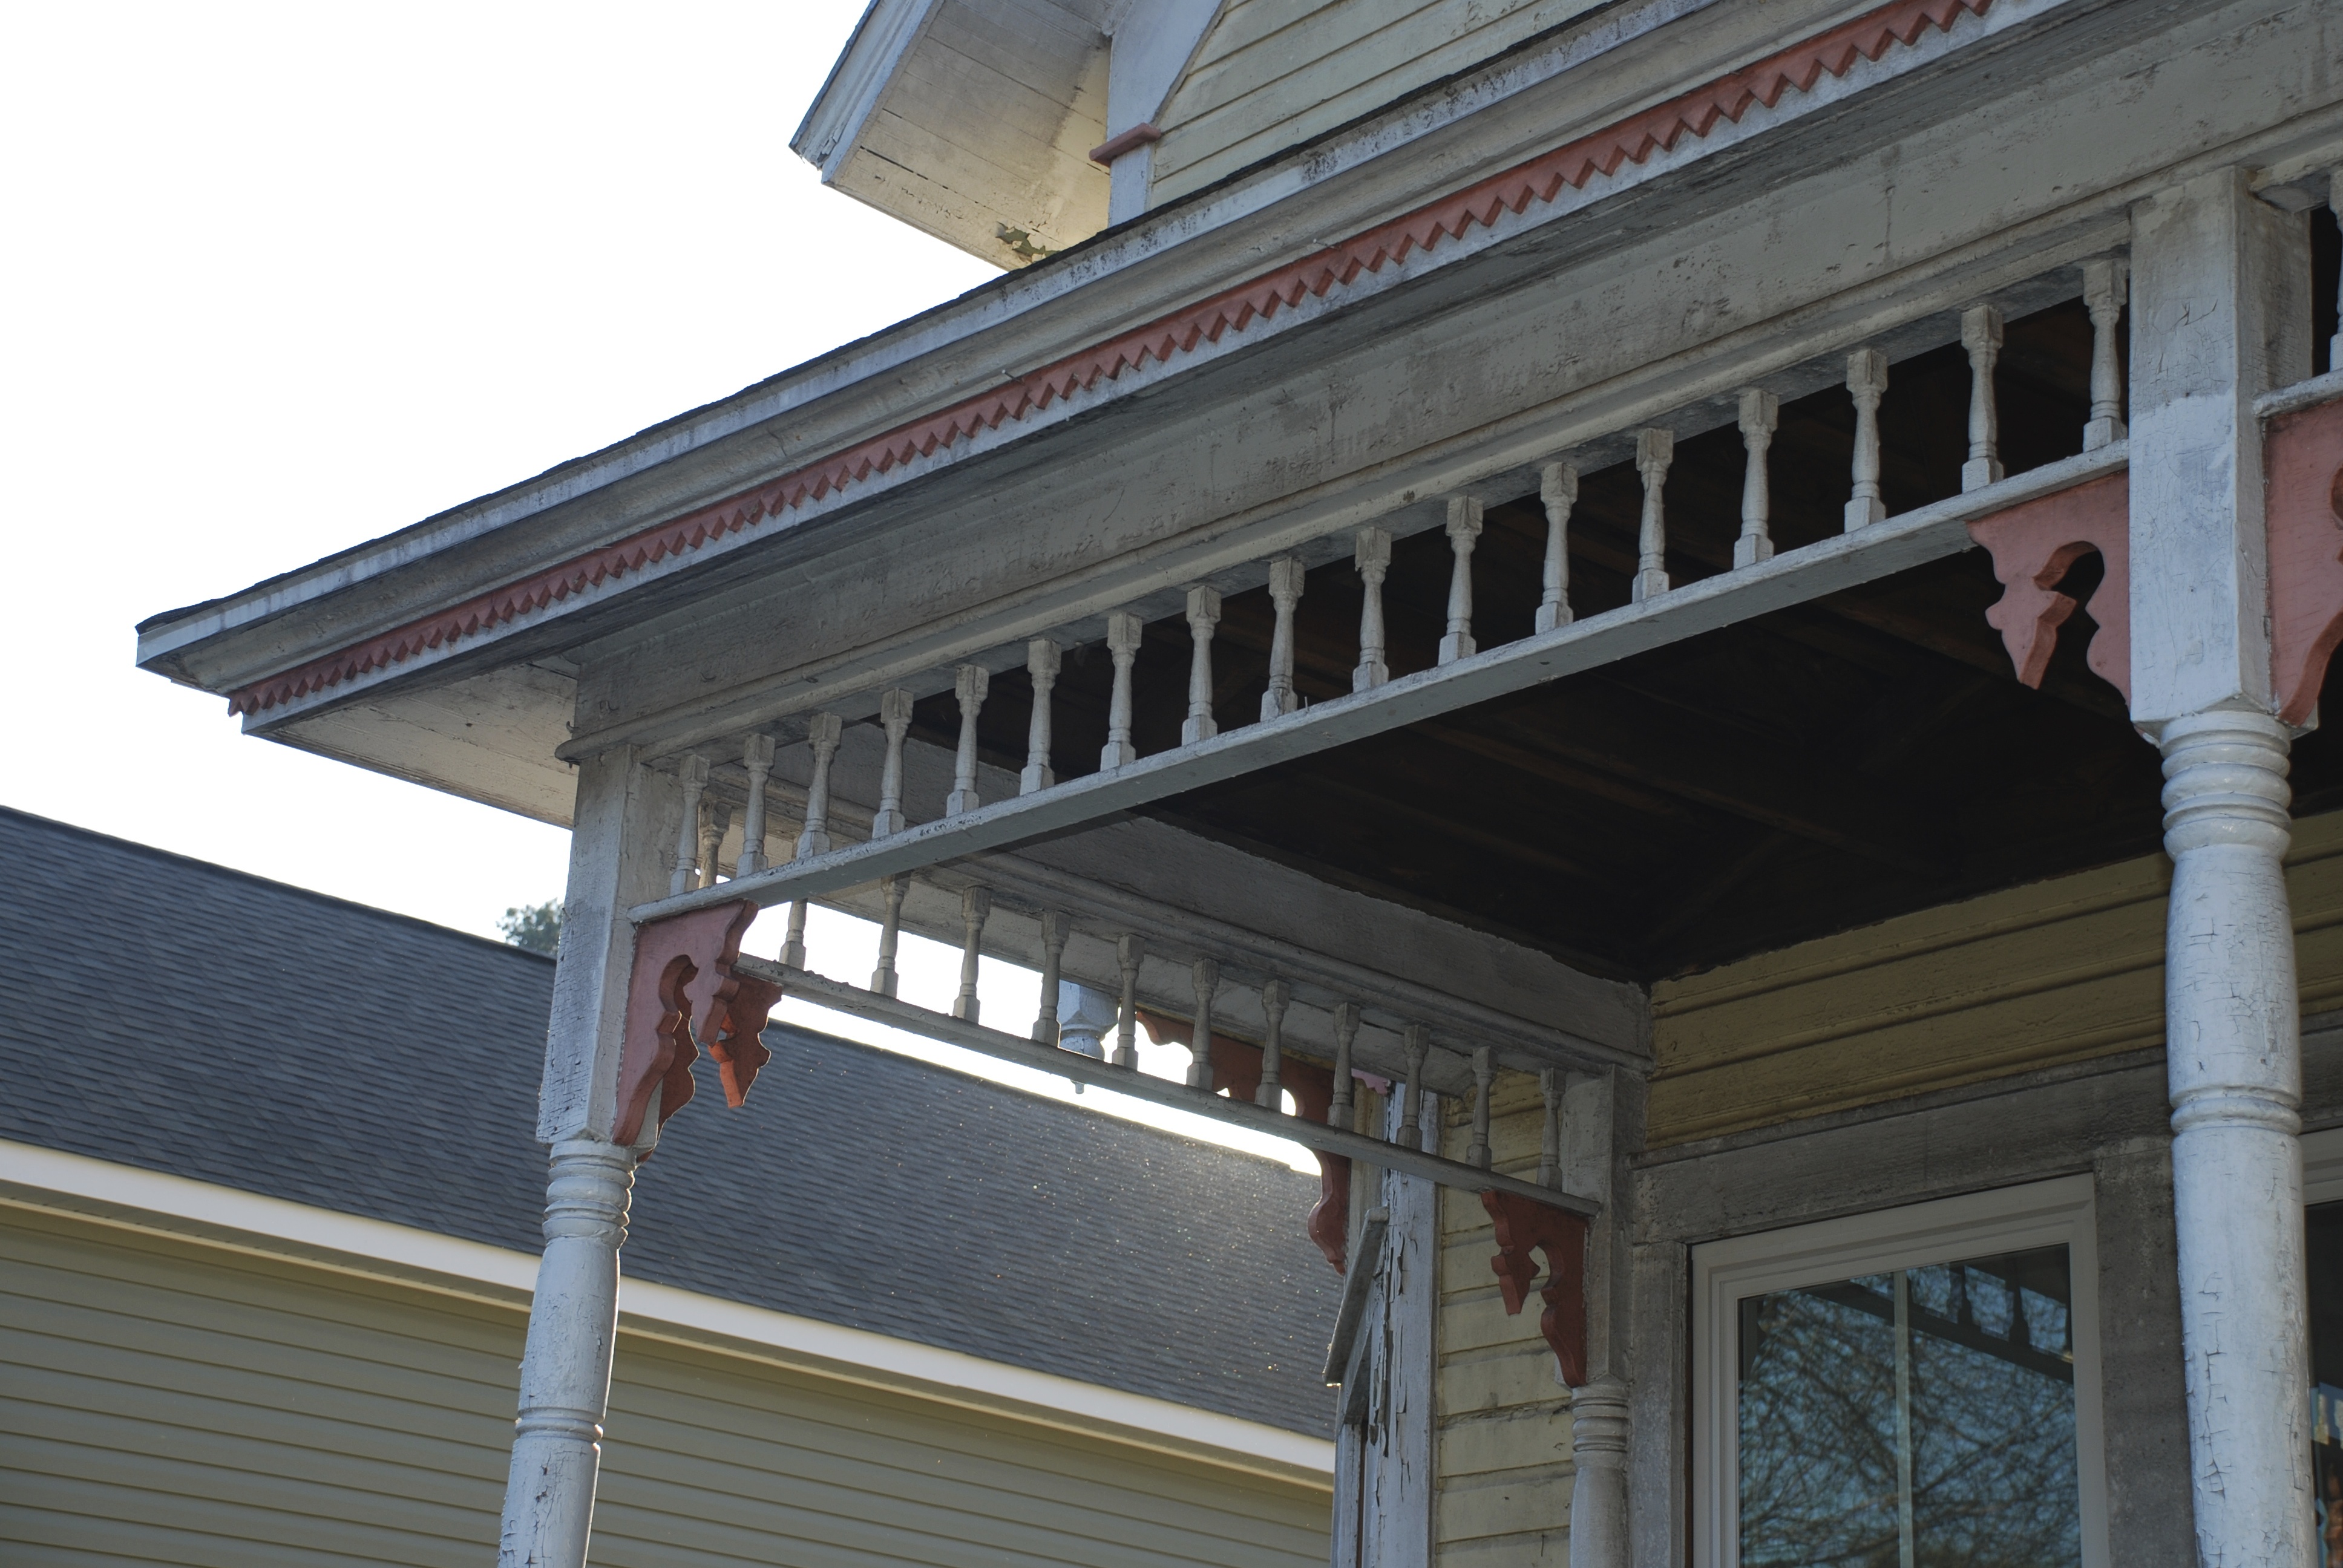 Grout exterior front porch columns before